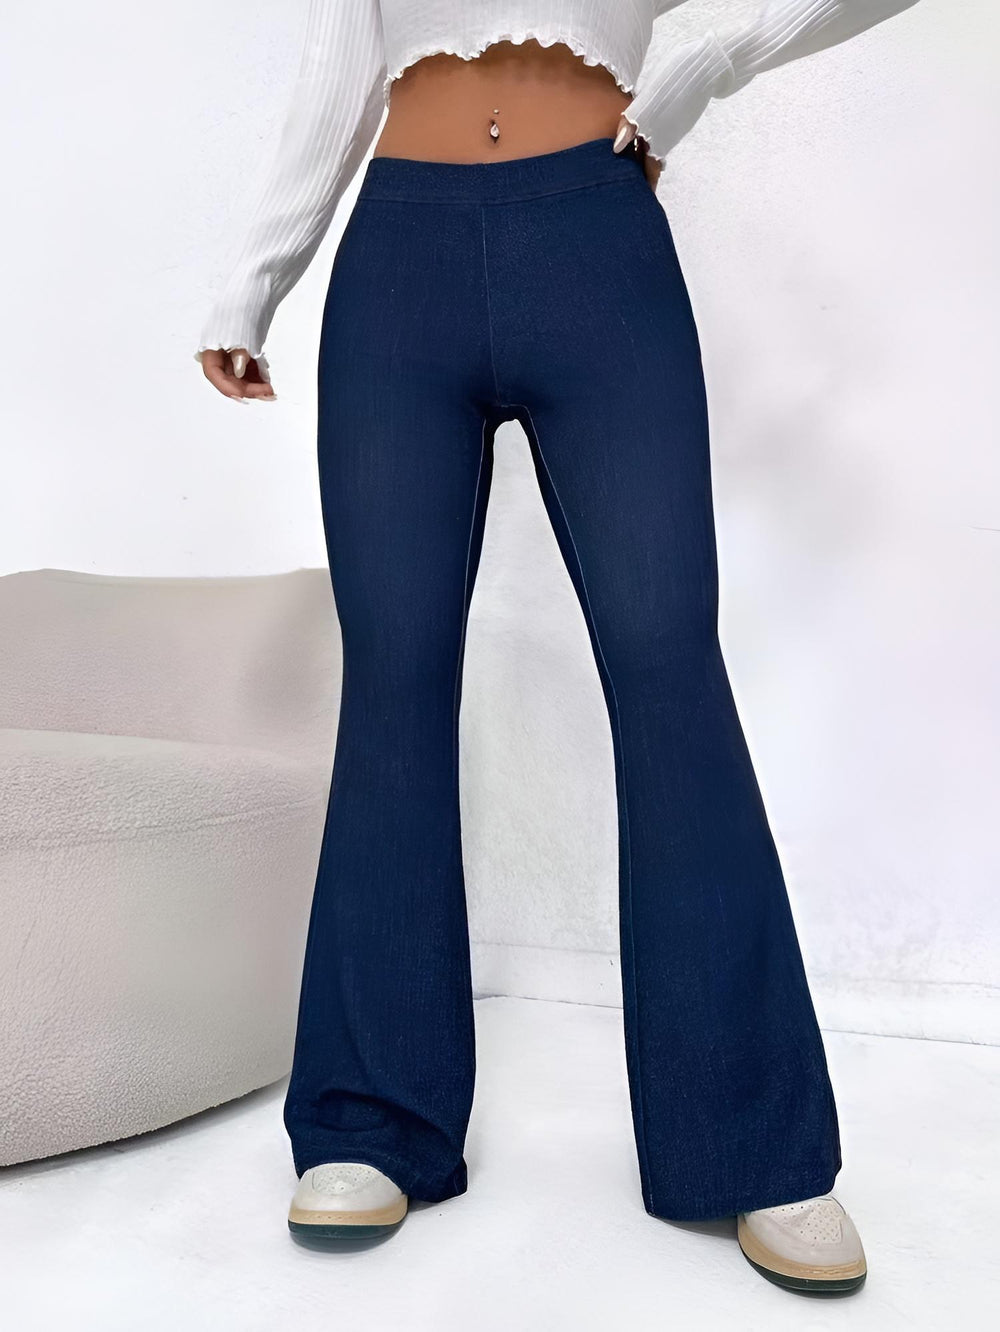 Pantalone Donna Jeans Denim Elastico Zampa Casual Comodo Easy - LE STYLE DE PARIS